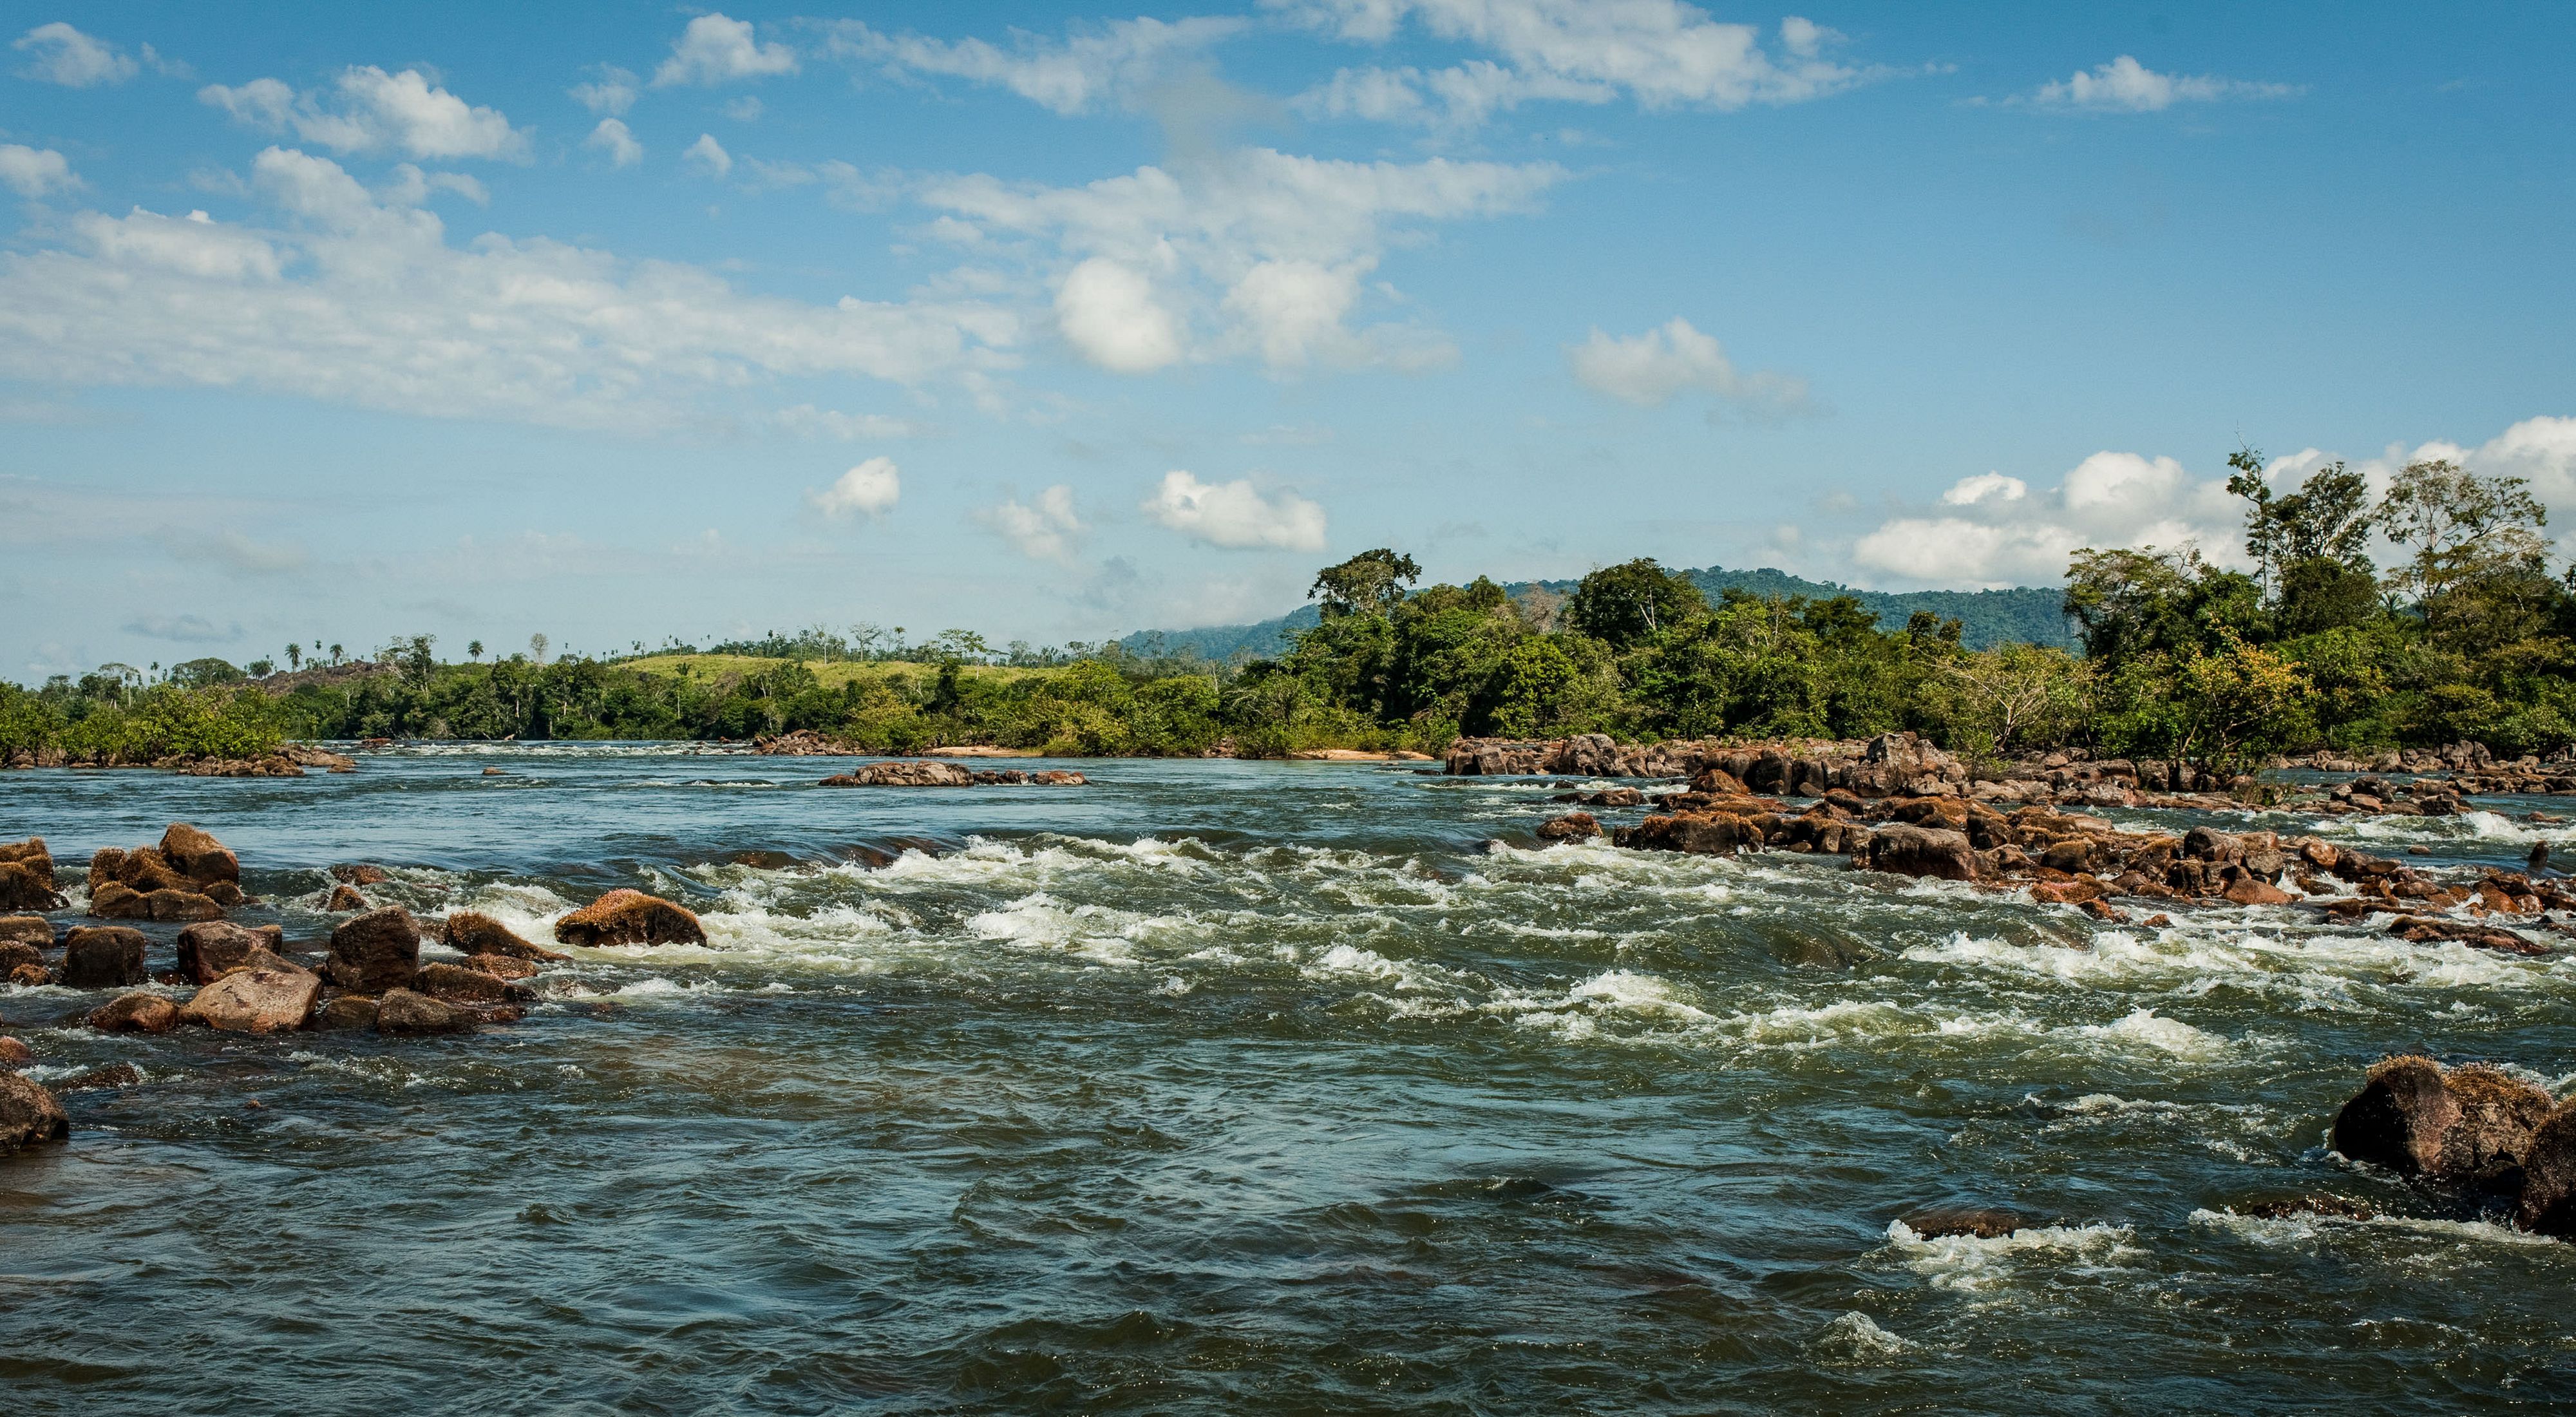  Xingu' river, Brasil